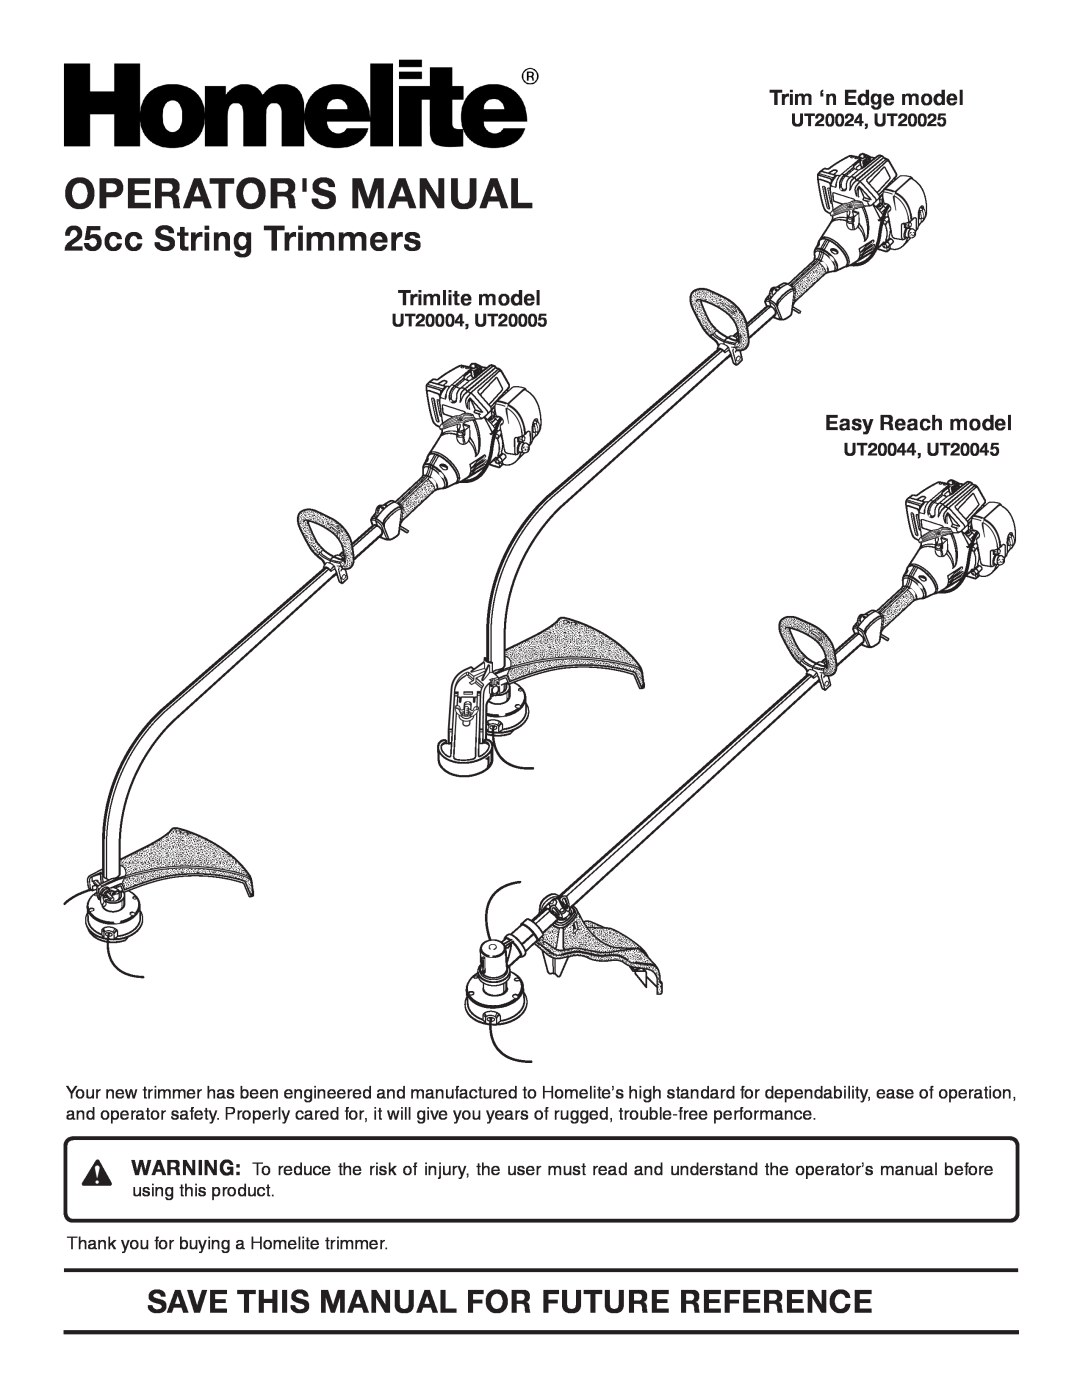 Homelite UT20045 manual Operators Manual, 25cc String Trimmers, Trim ‘n Edge model, Trimlite model, Easy Reach model 